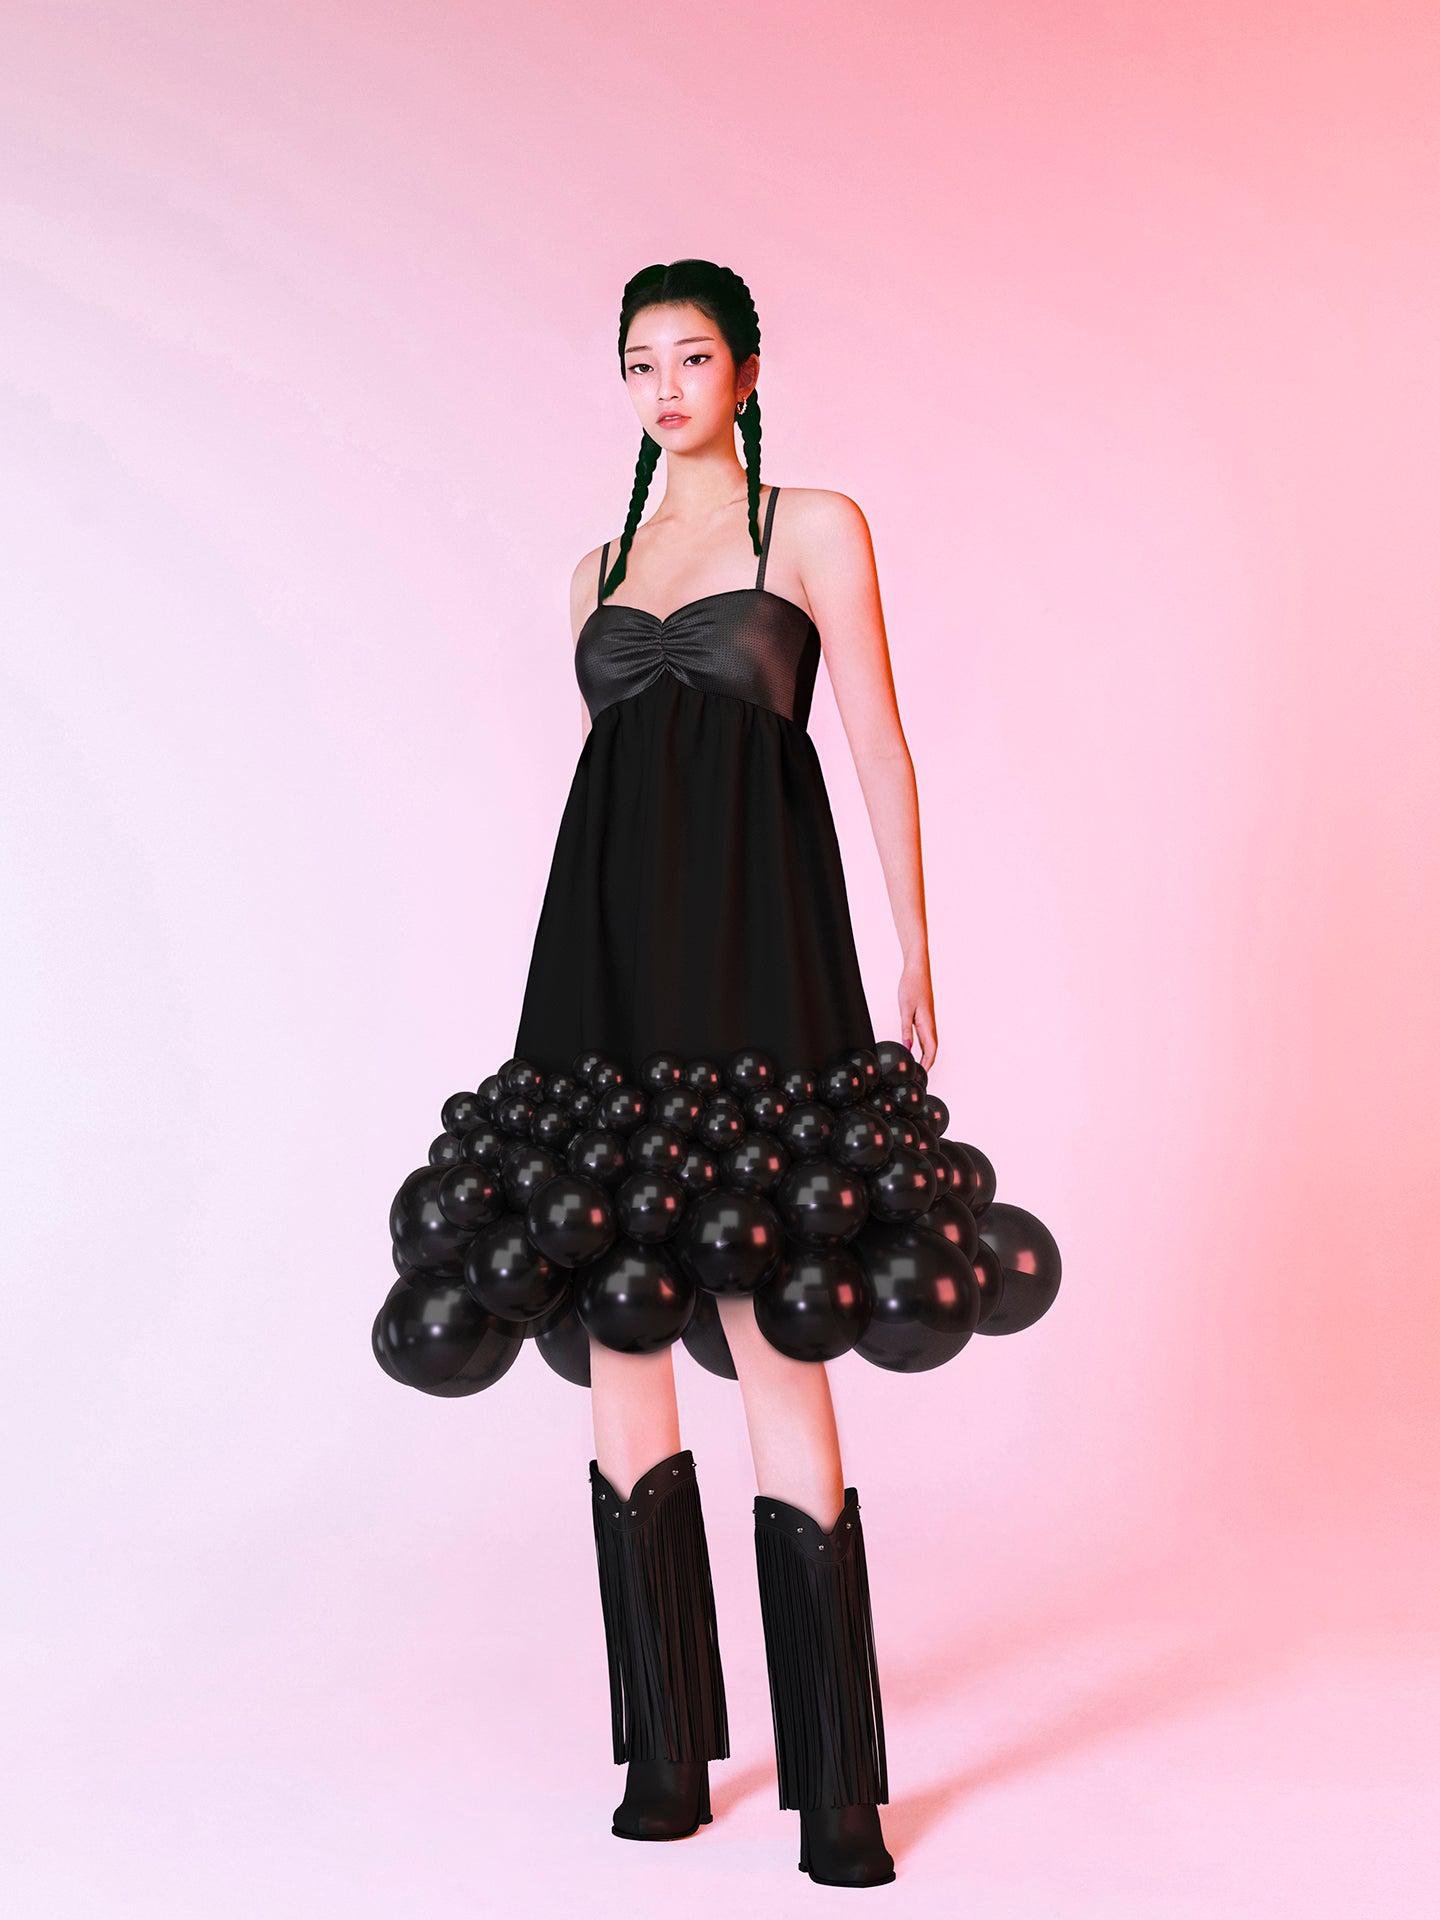 The Black Balloon Mini Dress by OHROZY